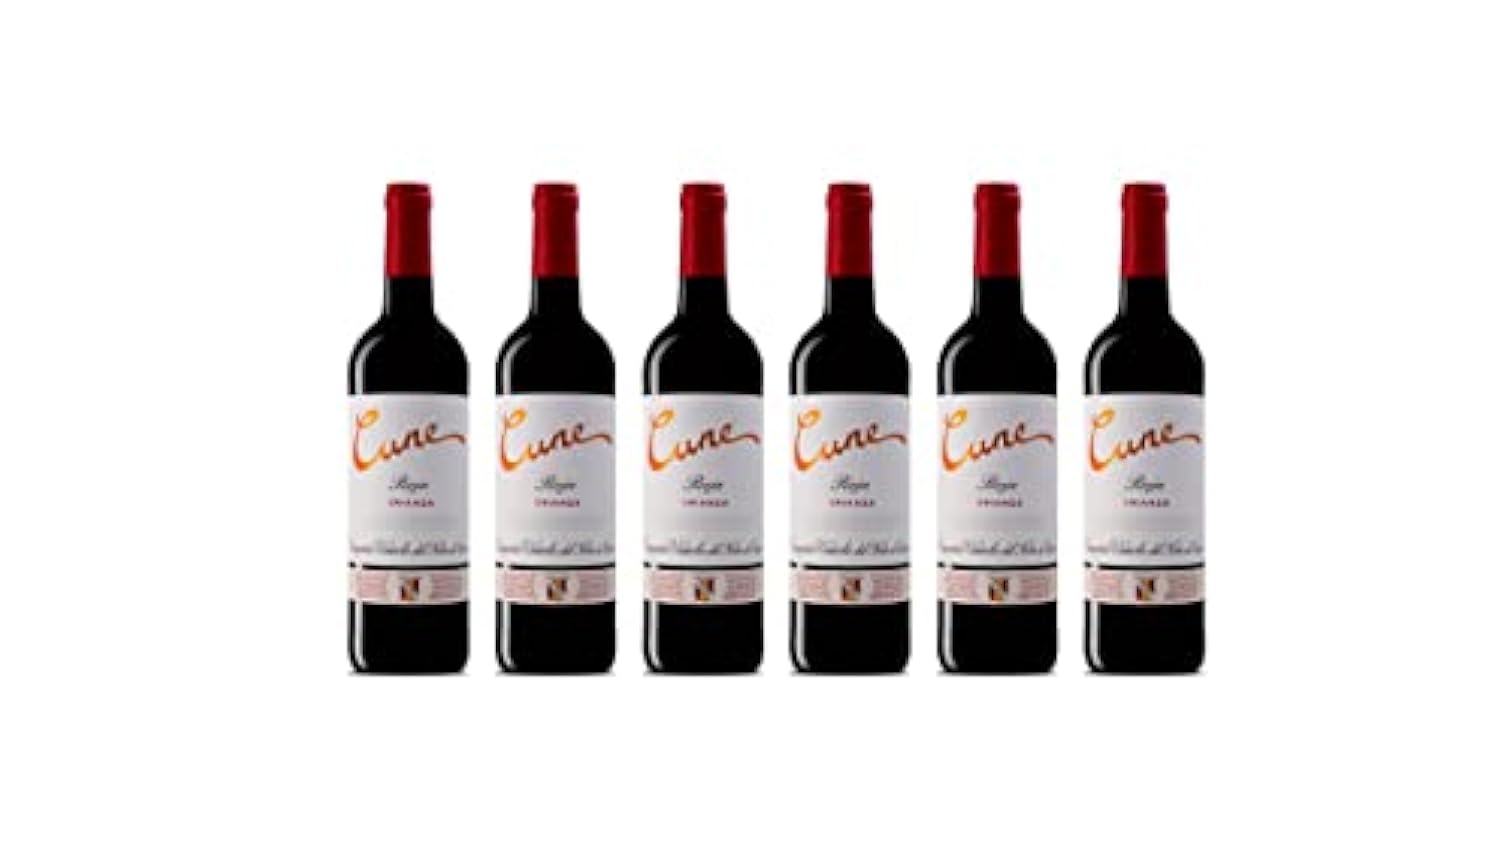 Cune Vino Tinto - Paquete de 6 x 750 ml - Total: 4500 ml OnXrXu4N